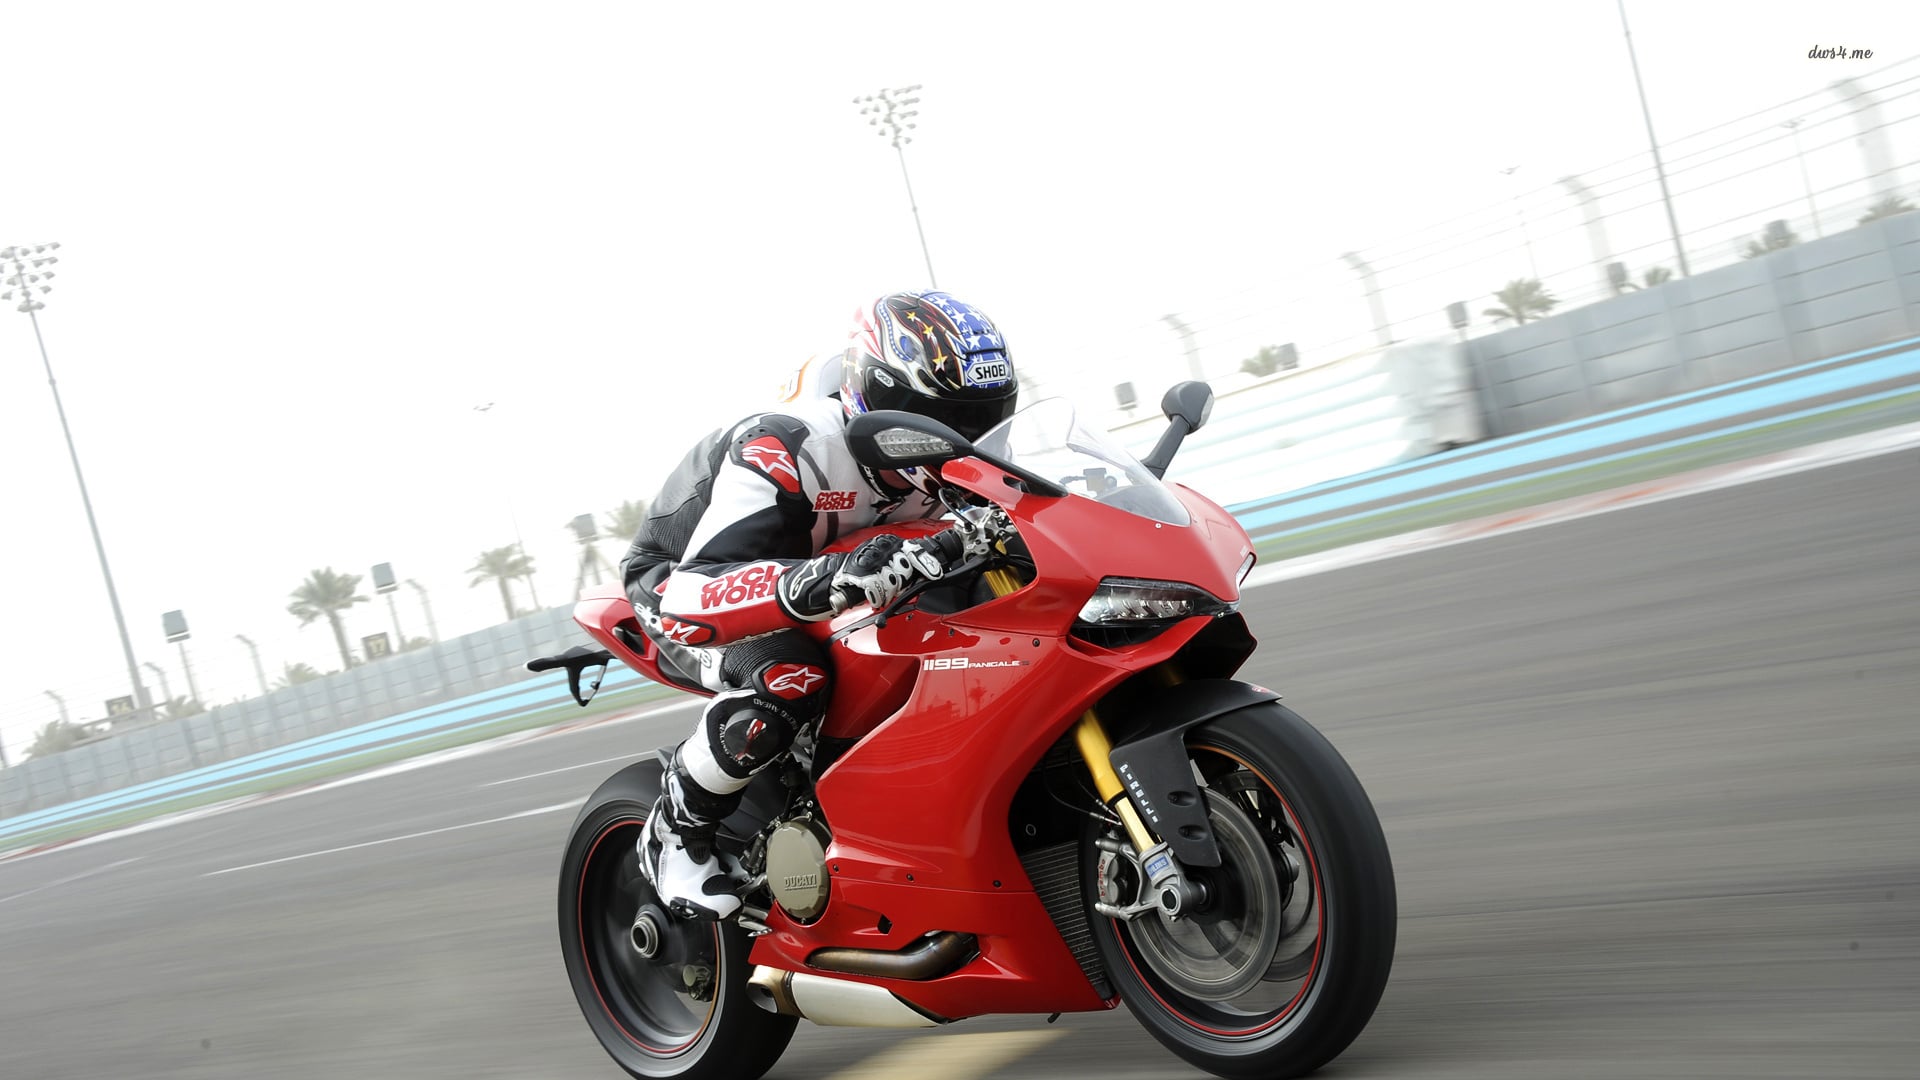 Ducati 1299 Superleggera Black Hd Wallpaper Backgrounds Download